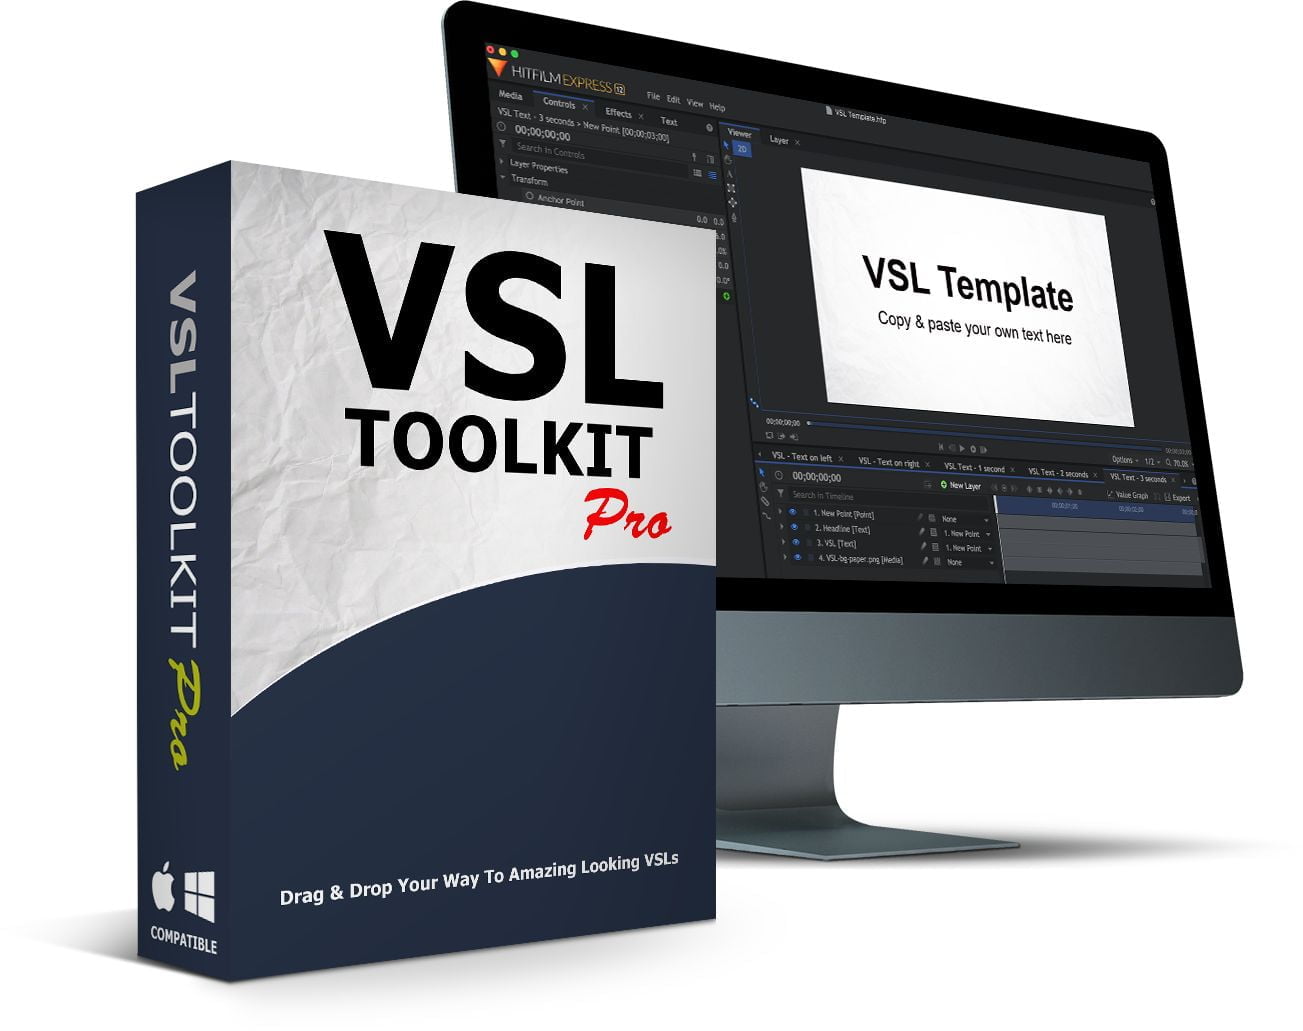 VSL-Toolkit-Pro-Review